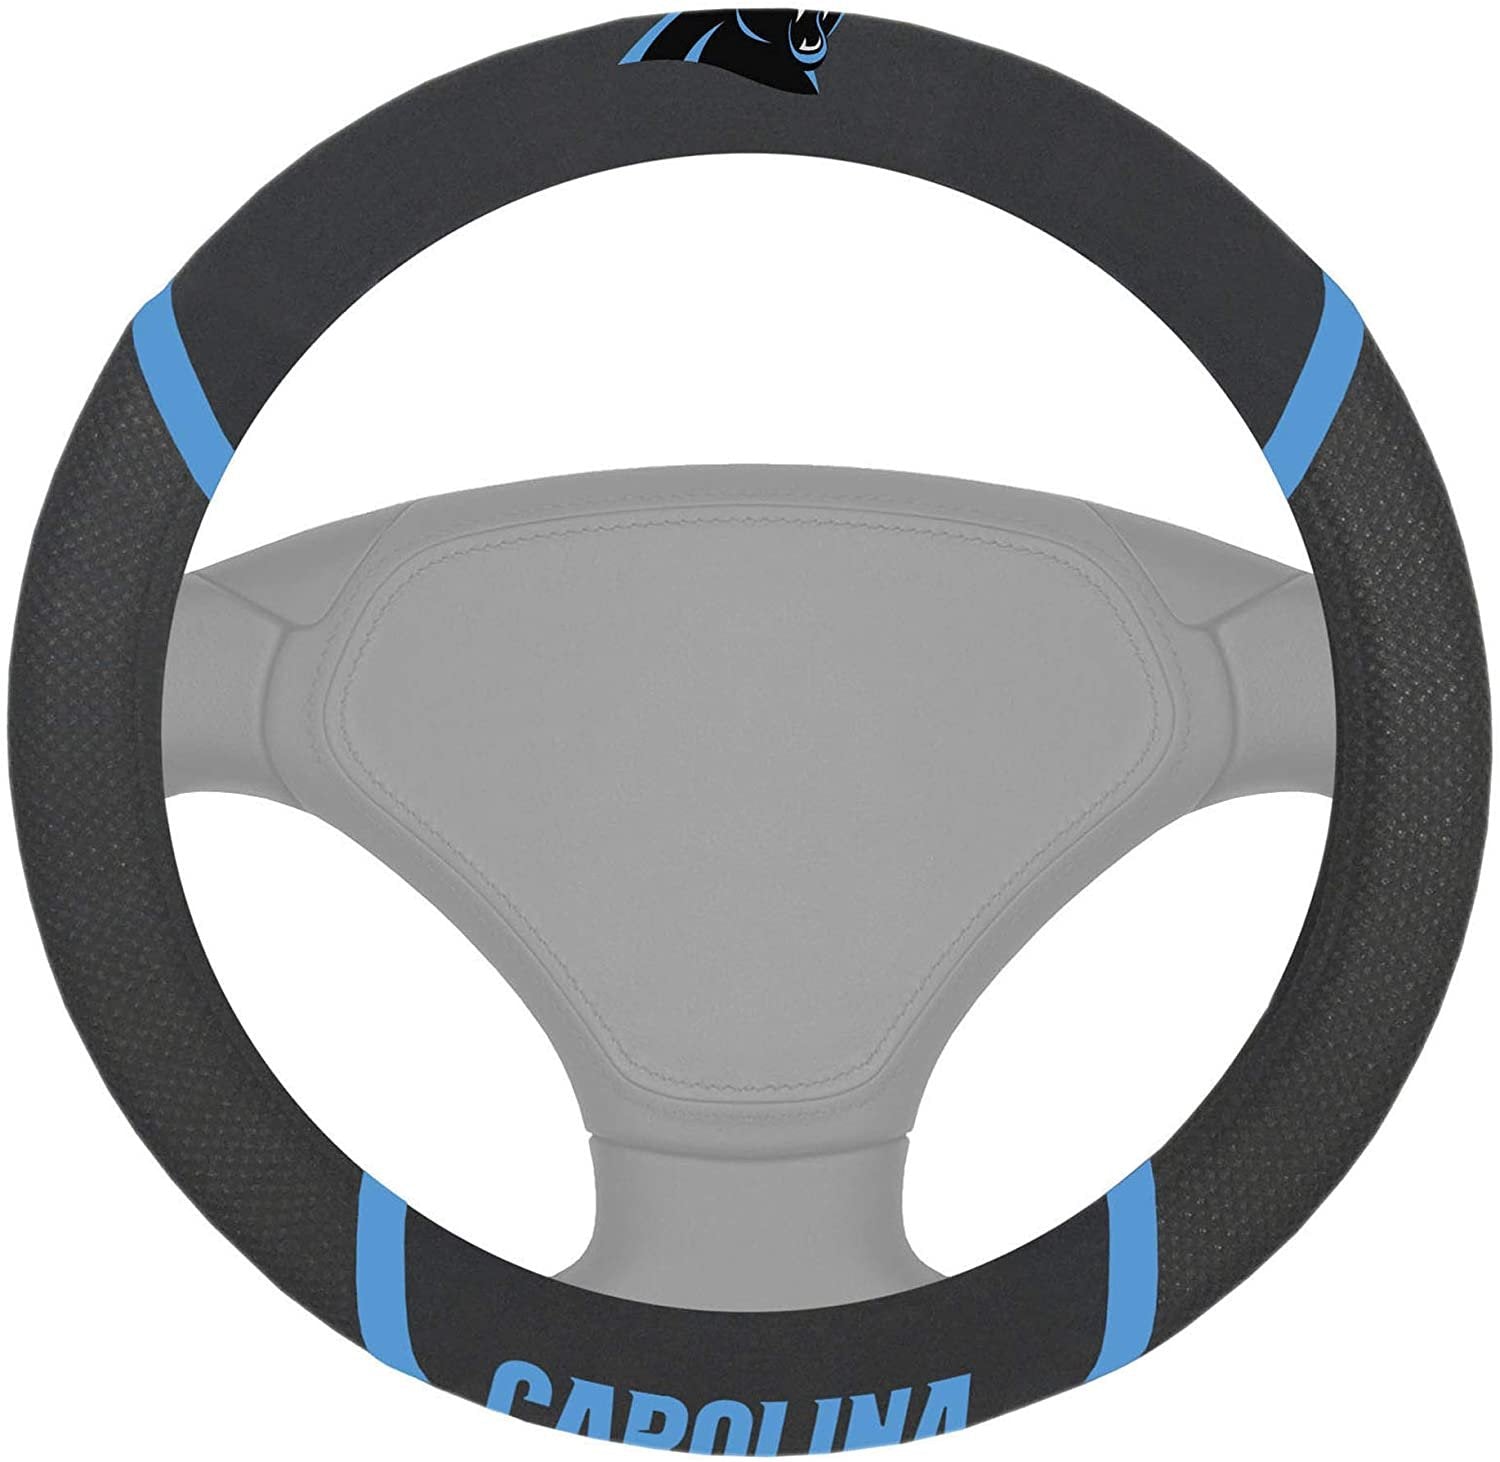 Carolina Panthers Premium 15 Inch Black Emroidered Steering Wheel Cover